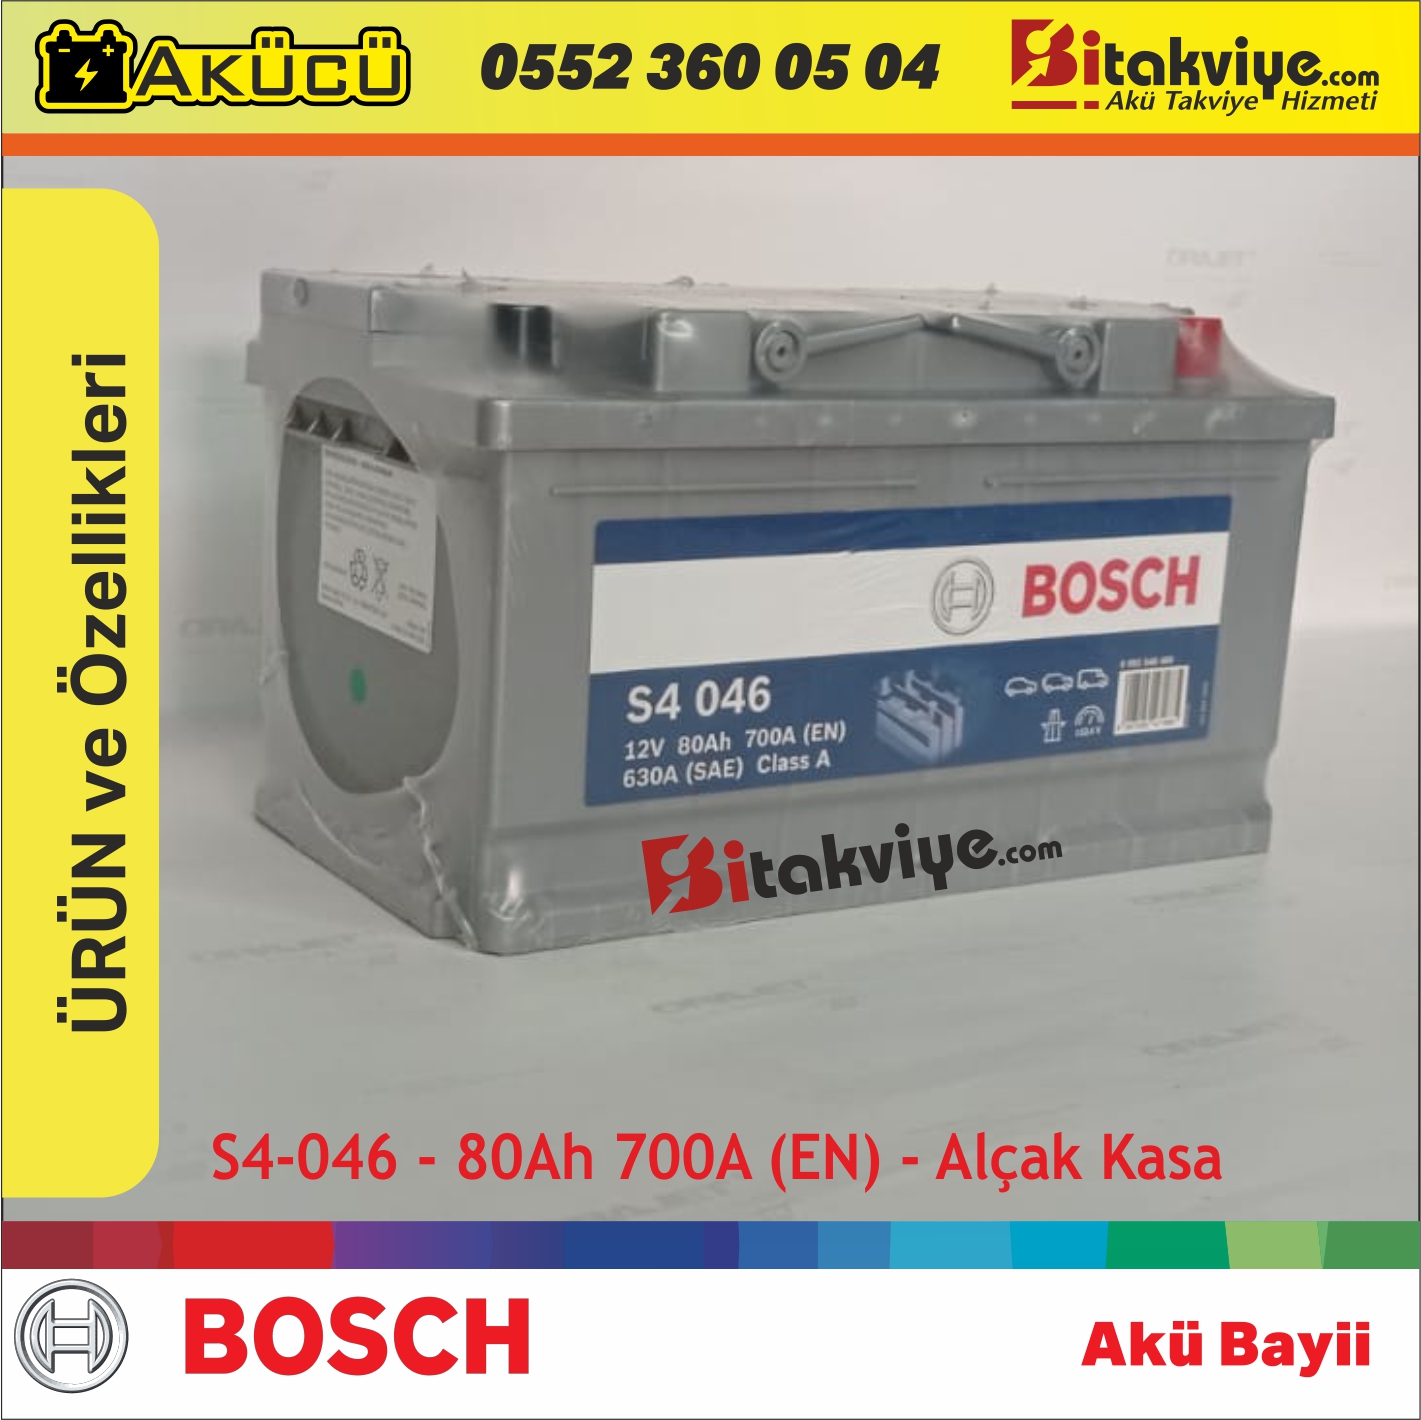 Bosch Akü Bayi akutakviyesiankara.com - Bosch marka Bosch S4 046 12 V 80 Ah - 700 A (EN) Volkswagen - Ford - Opel Akü